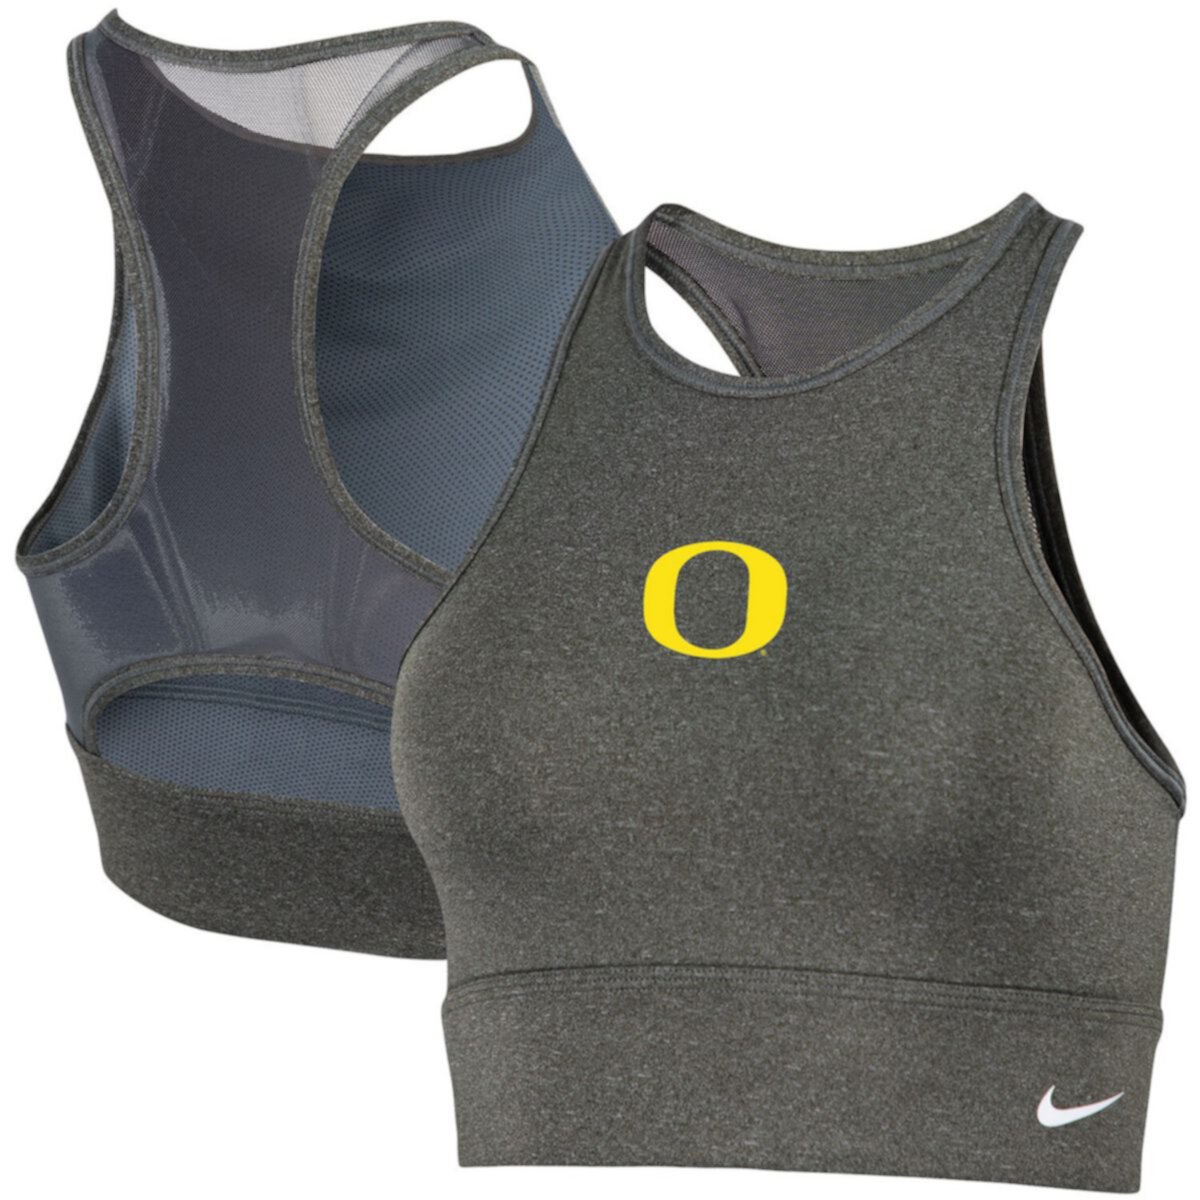 Спортивное бра Nike цвета серого цвета Oregon Ducks Everything Performance Nike